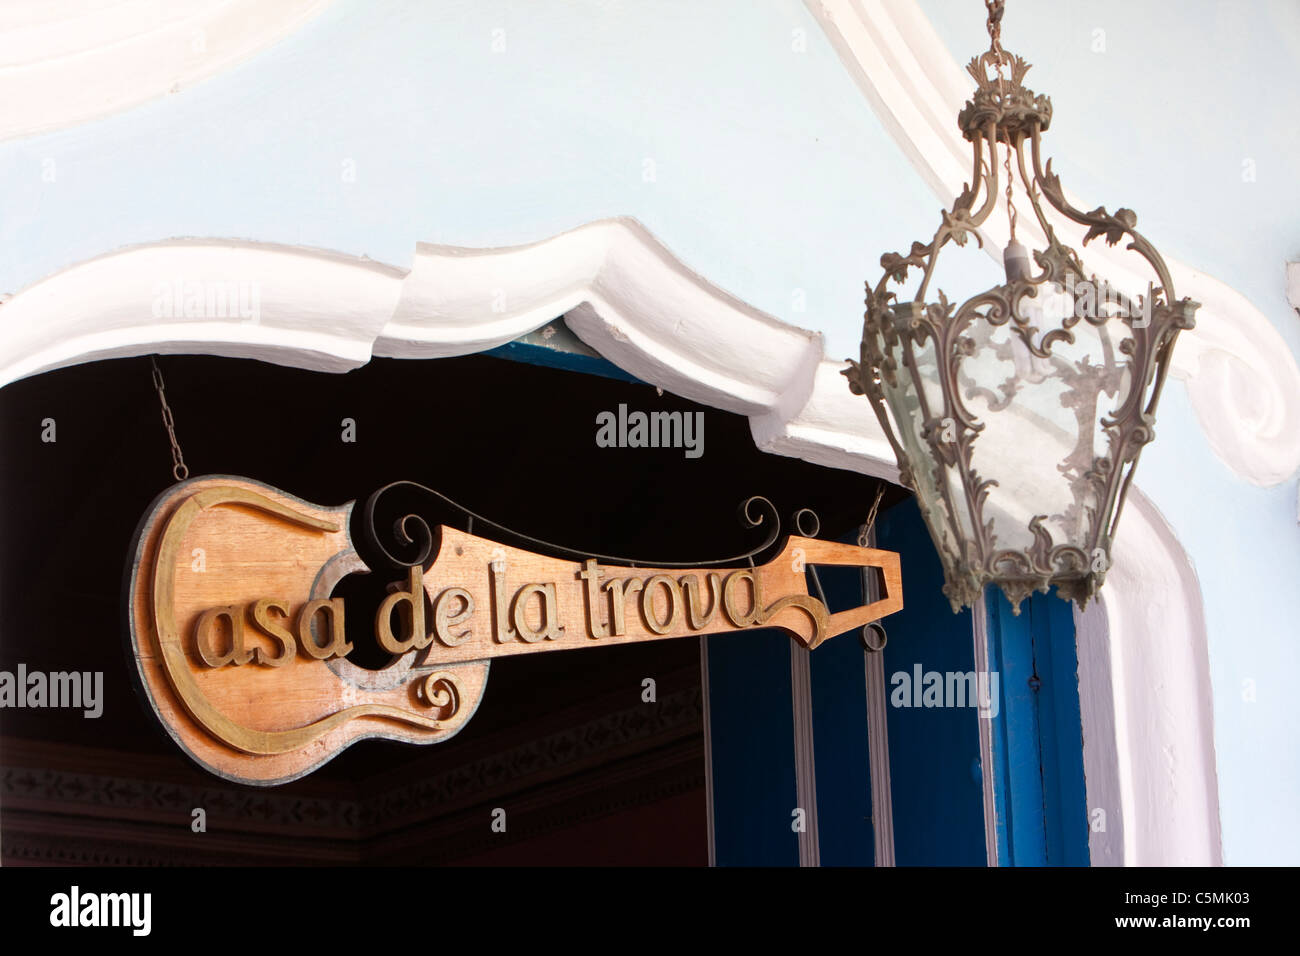 Cuba, Trinidad. Entrance to Casa de la Trova, a Bar-Restaurant with Music. Stock Photo